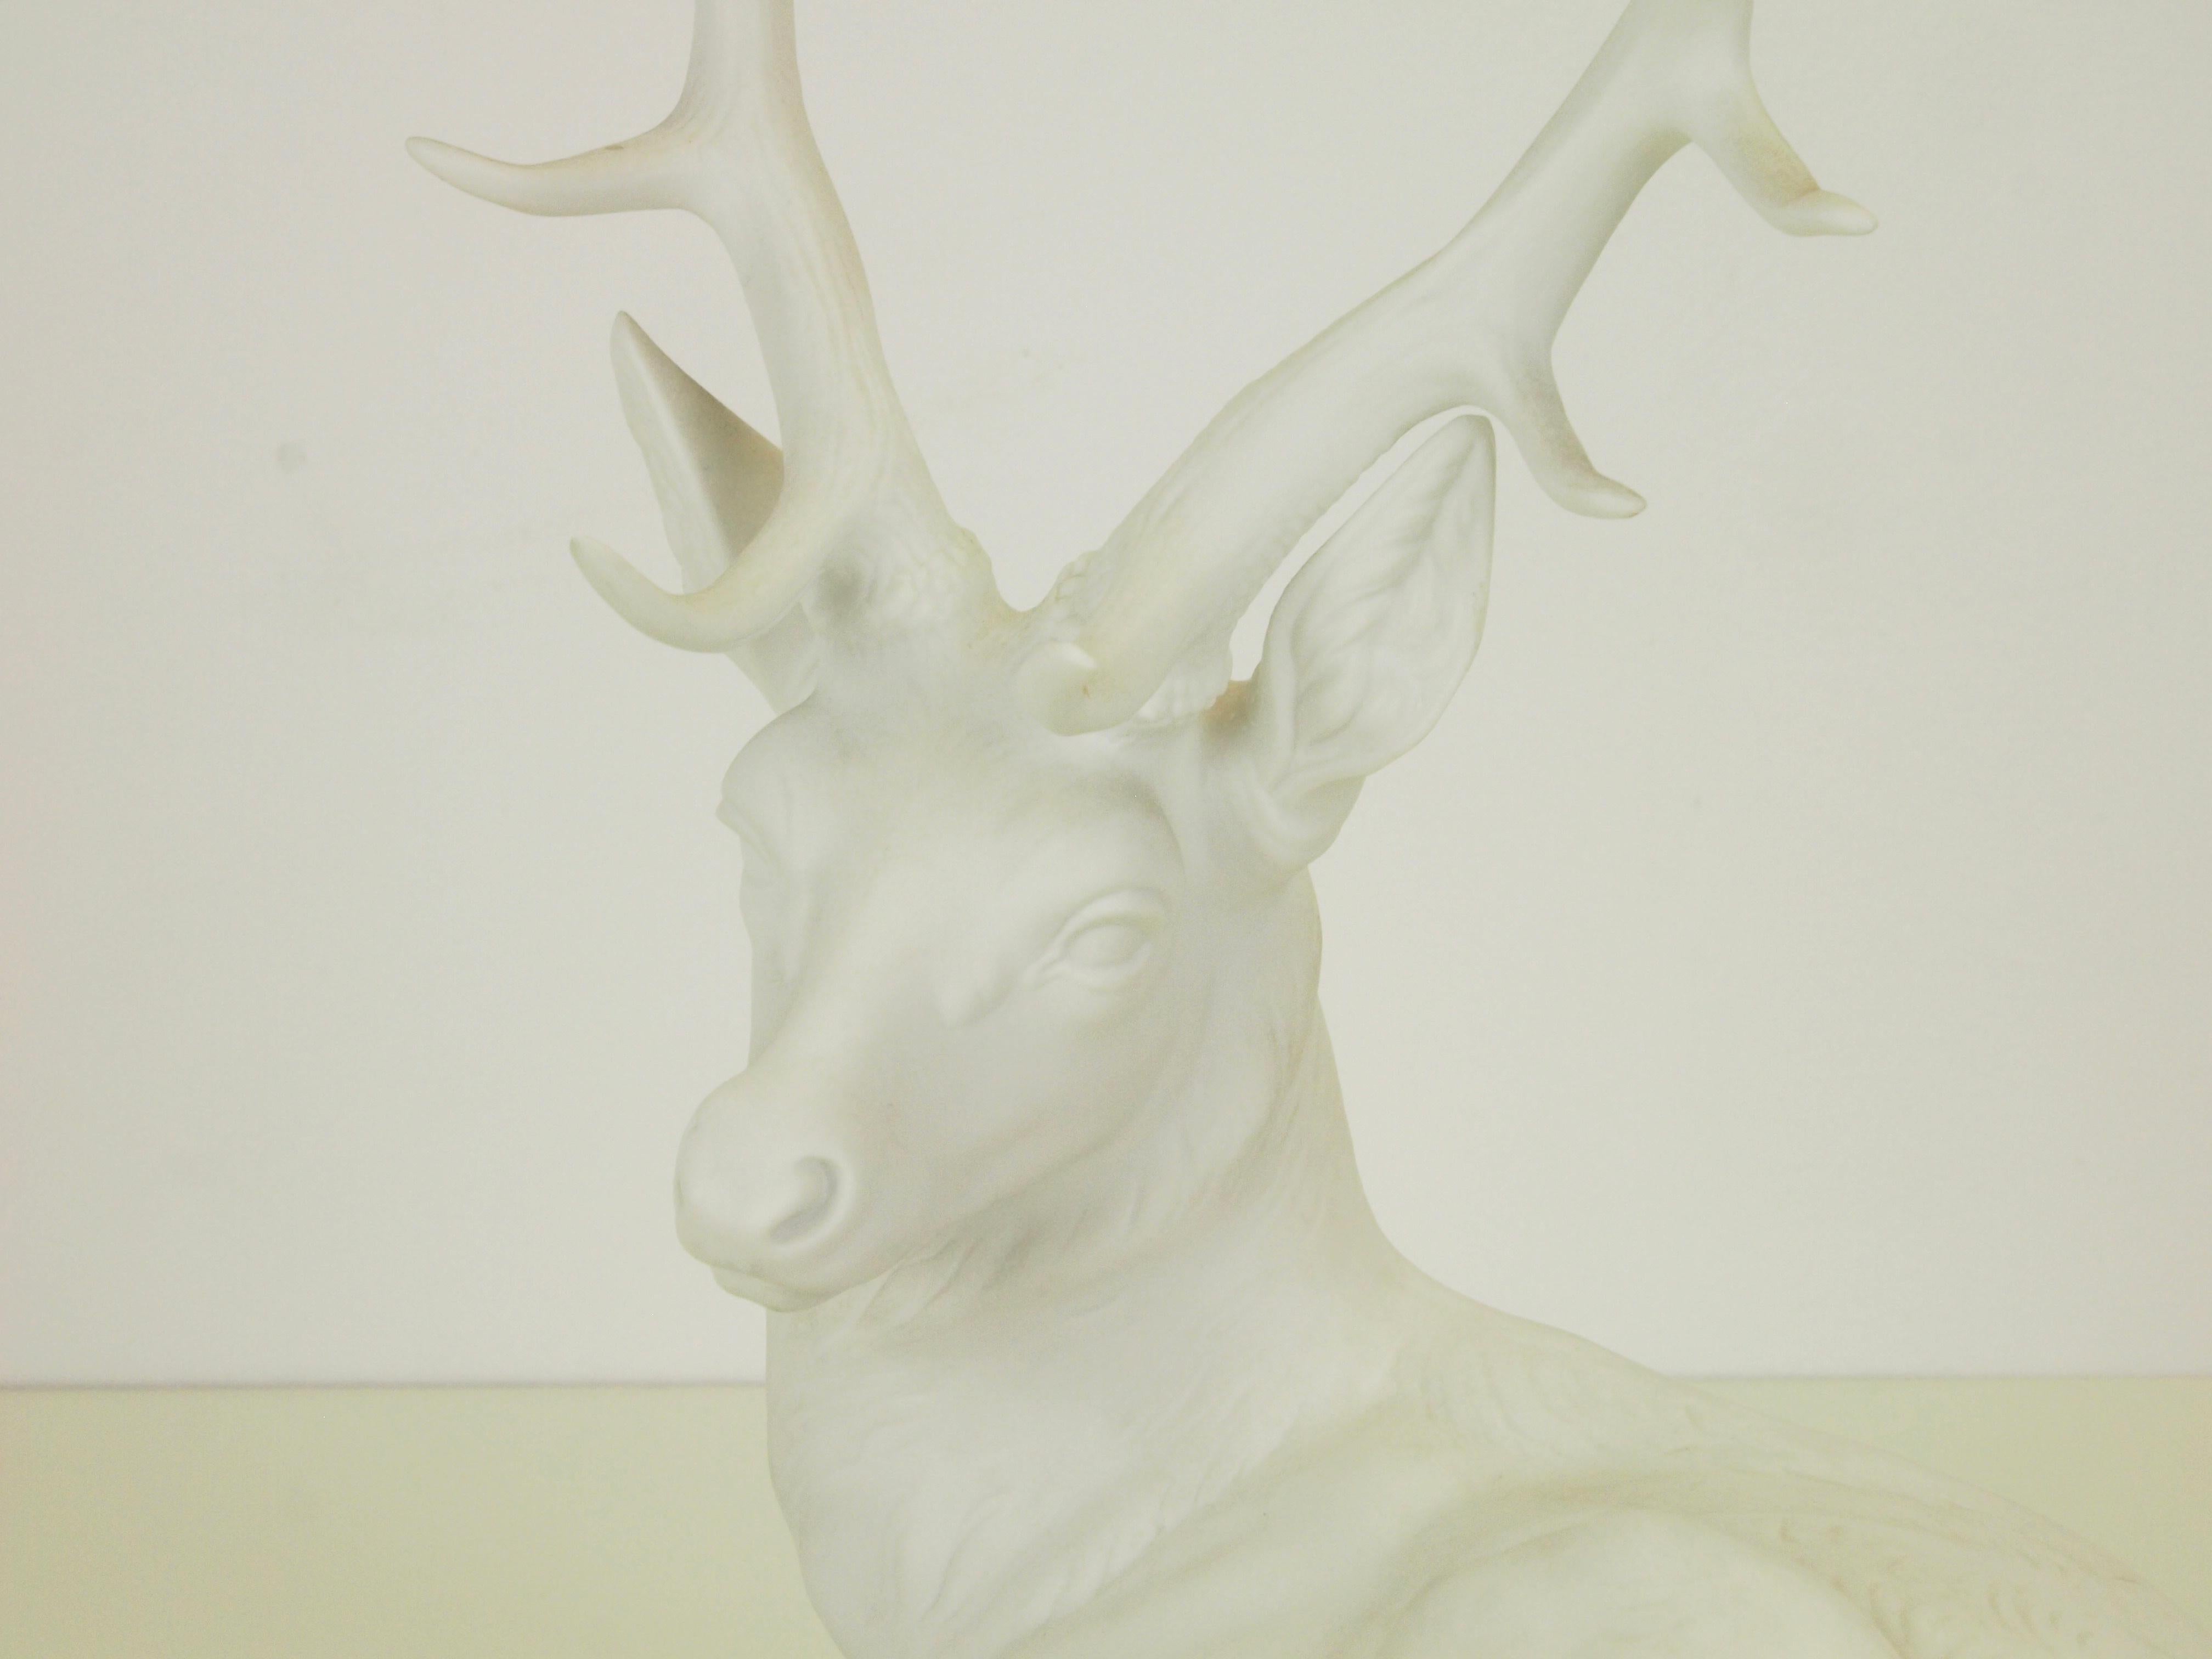 German Nymphenburg Porcelain Figurine Depicting a Red Deer